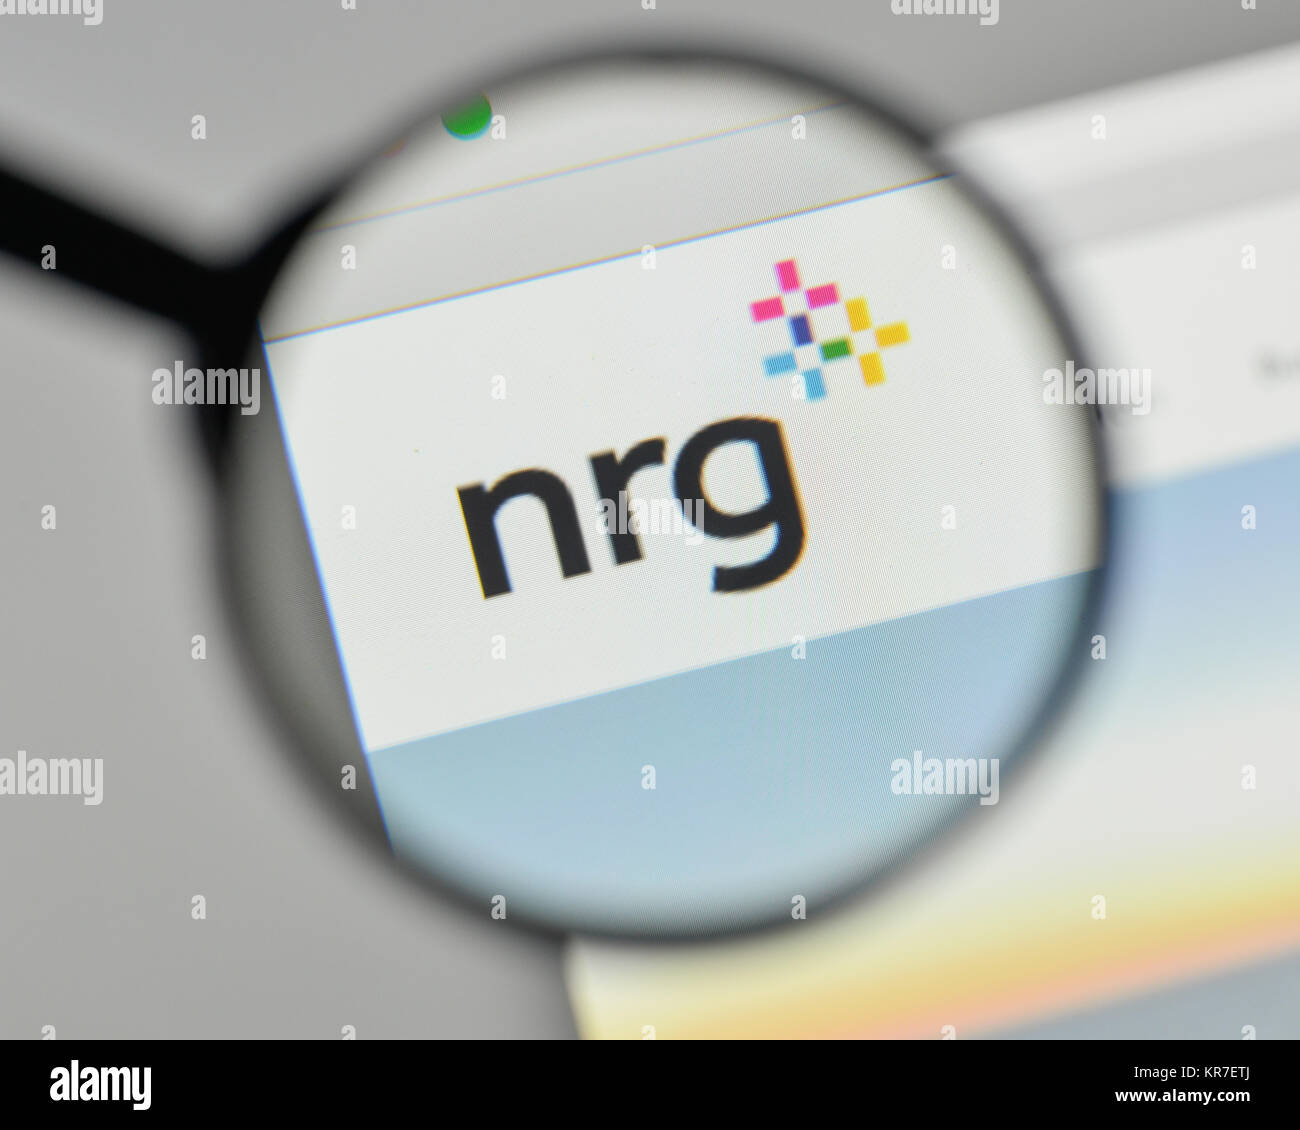 Milan, Italy - November 1, 2017: NRG Energy logo on the website homepage. Stock Photo